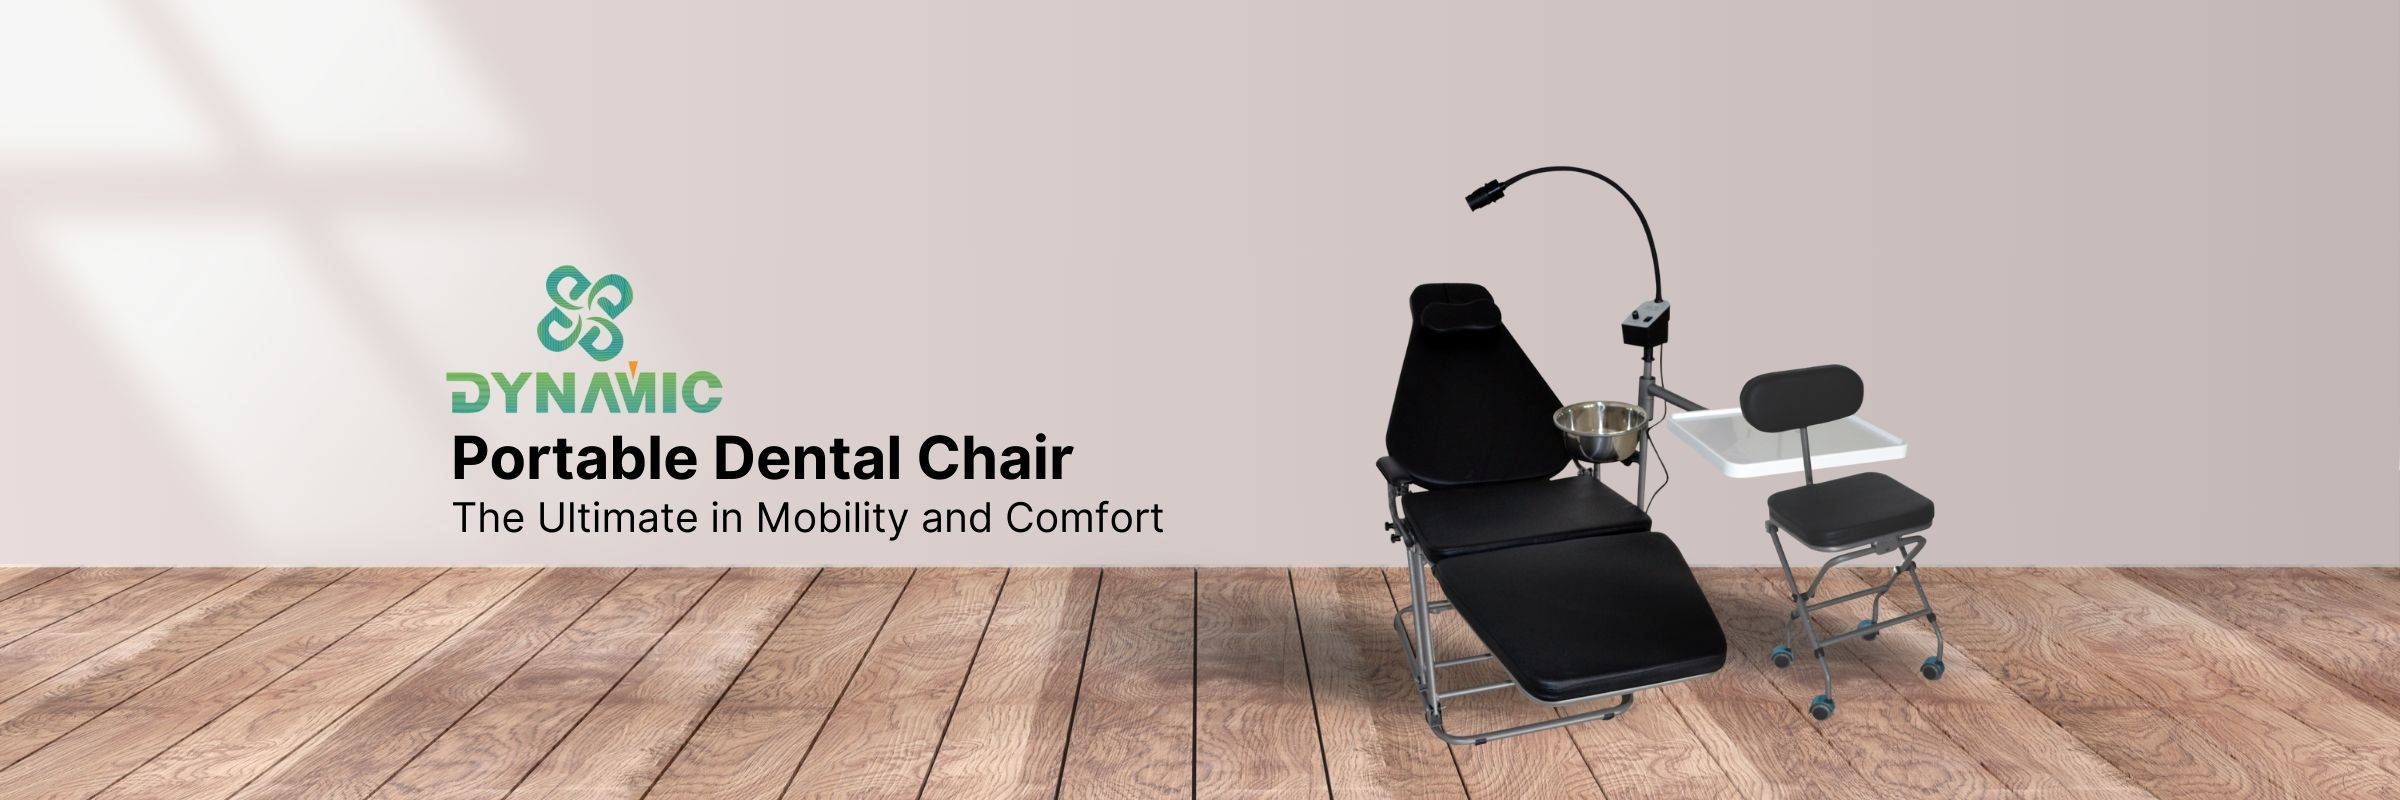 Dynamic Portable Dental Chair Banner